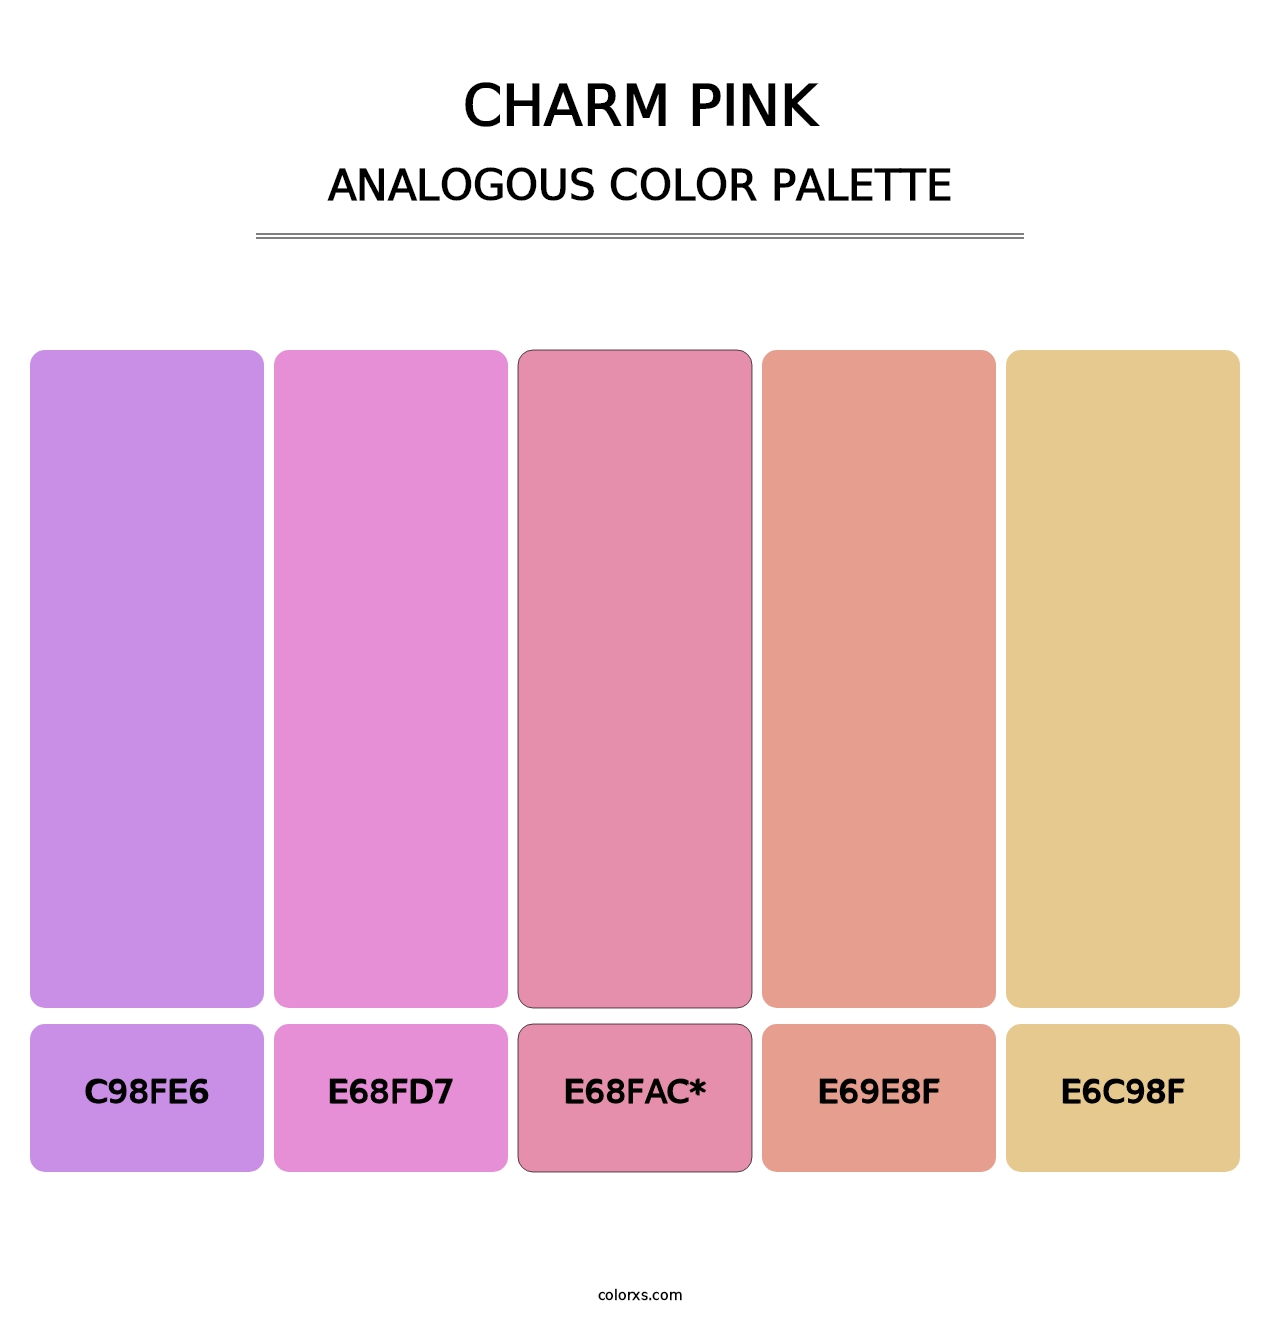 Charm Pink - Analogous Color Palette